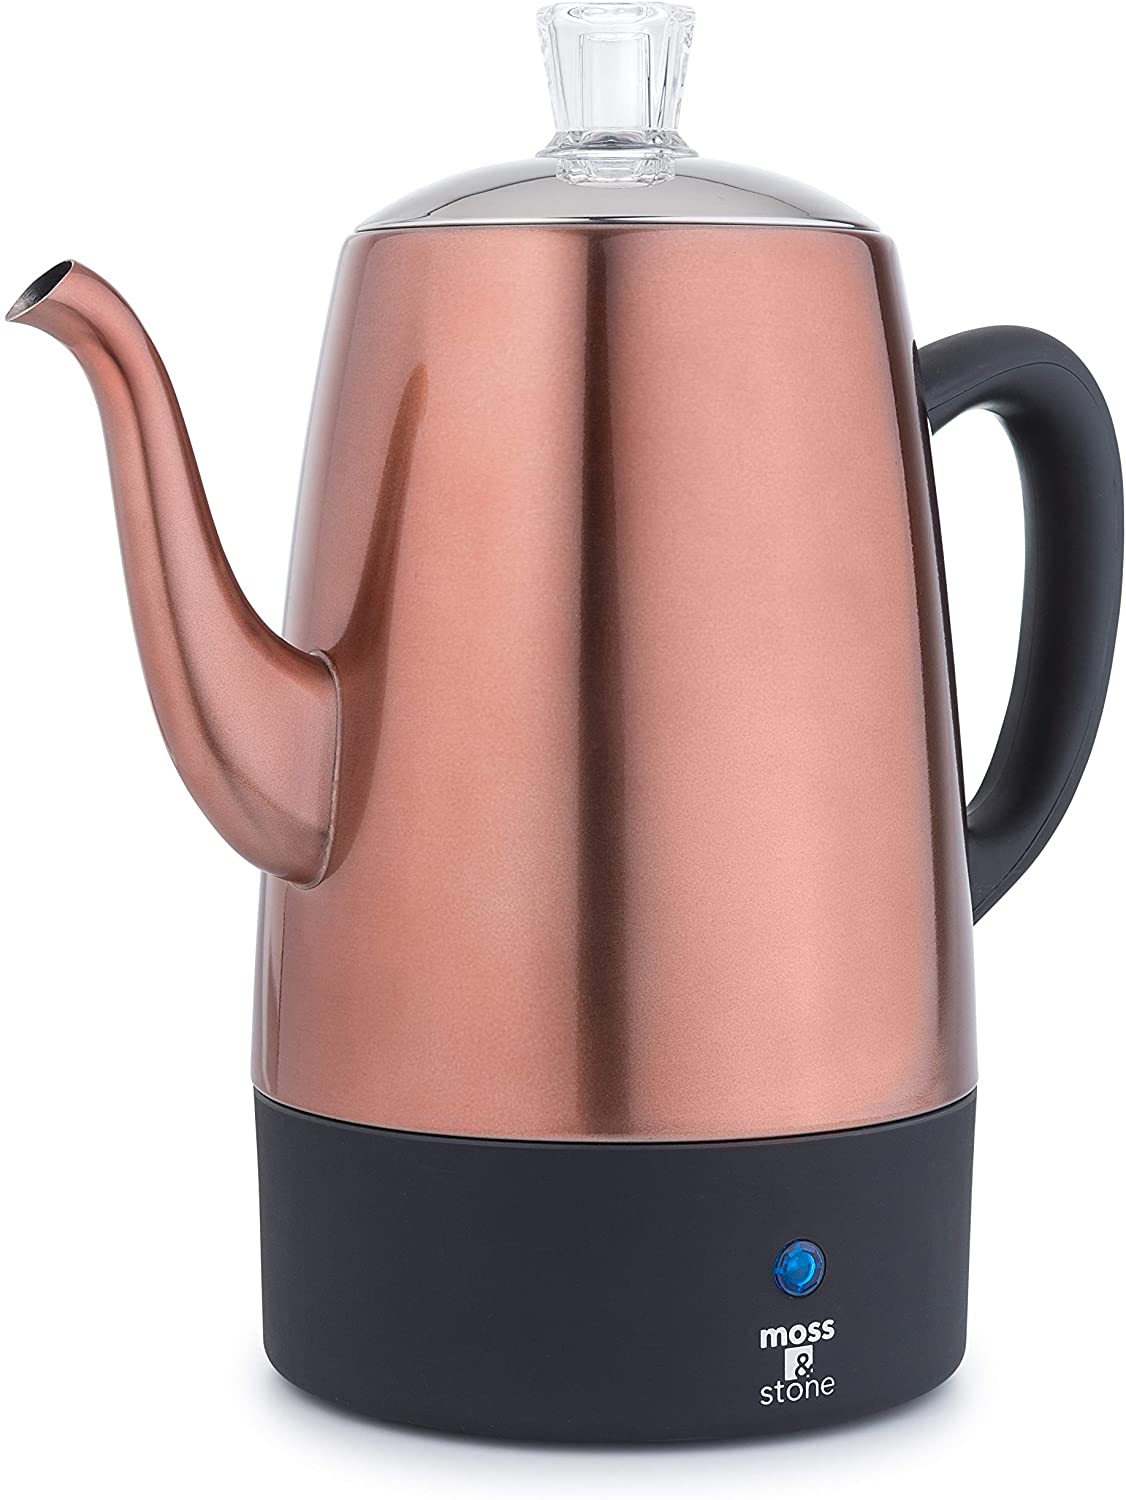 https://www.dontwasteyourmoney.com/wp-content/uploads/2020/06/moss-stone-copper-body-electric-coffee-percolator-10-cup-coffee-percolator.jpg